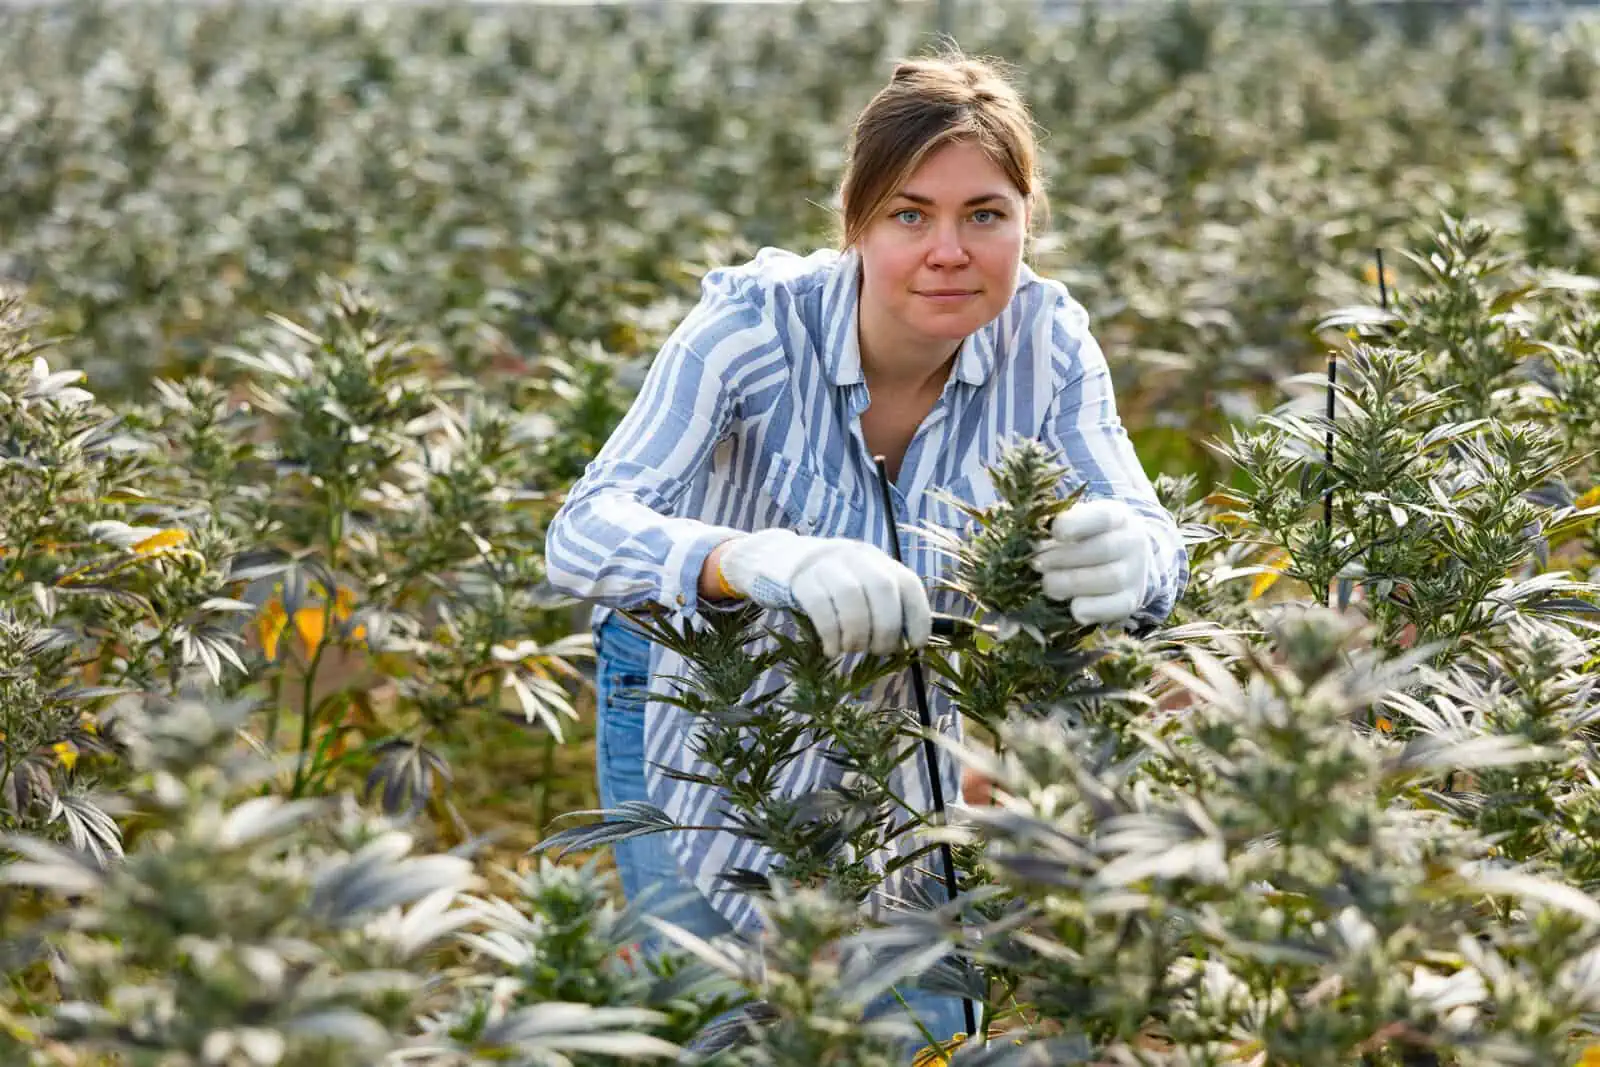 Marijuana Jobs Cannabis Careers